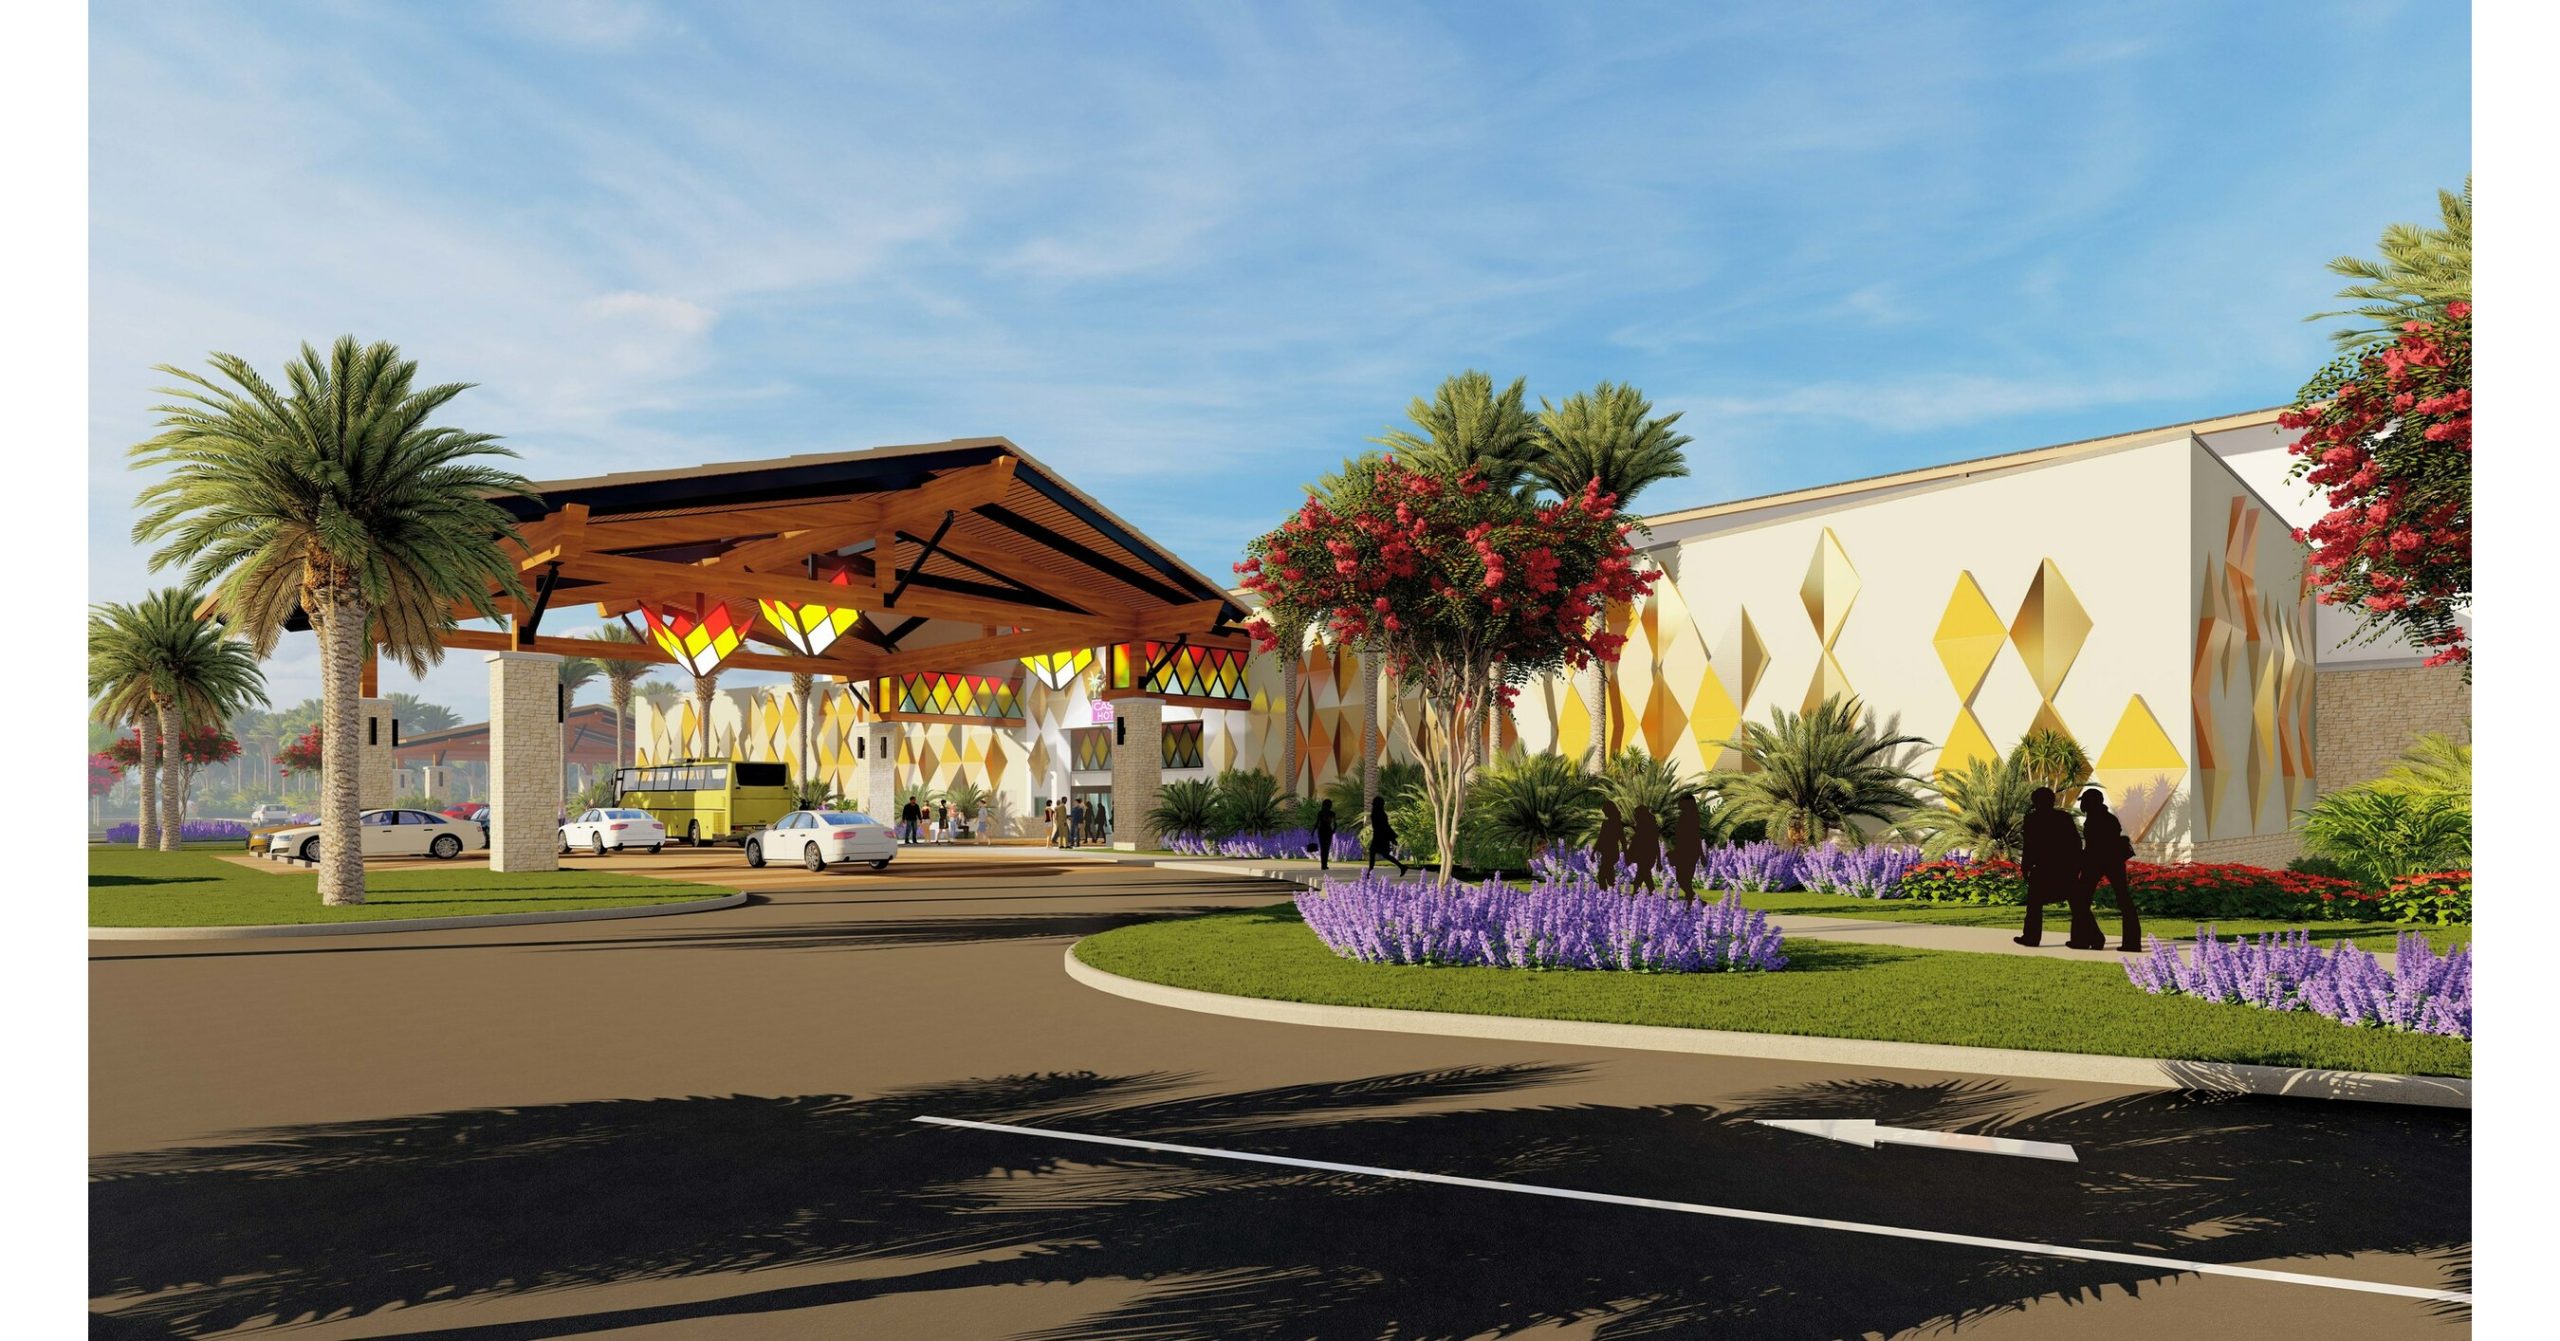 Brighton Seminole Hotel & Casino Breaks Ground; New Casino, Hotel and Entertainment Complex to Be Built NW of Lake Okeechobee